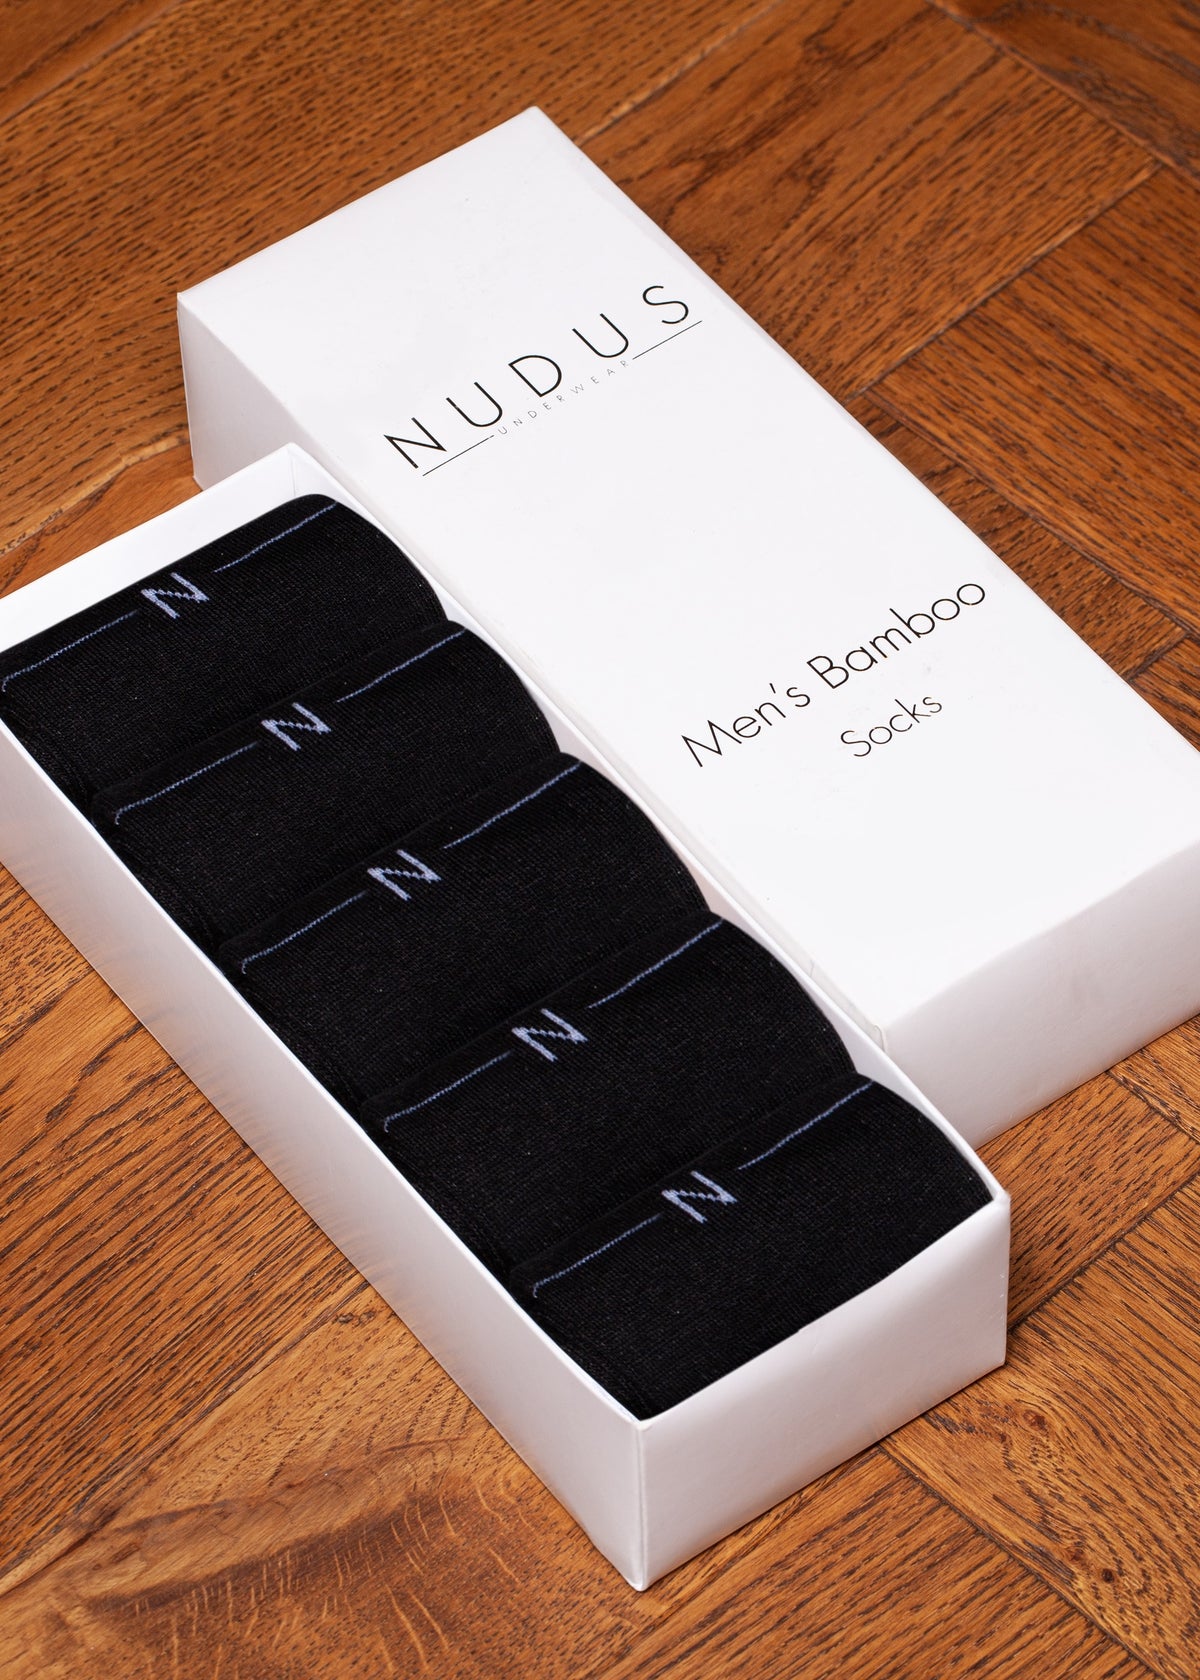 NUDUS Men’s Super Soft Bamboo Dress Socks 5-Pair Gift Box